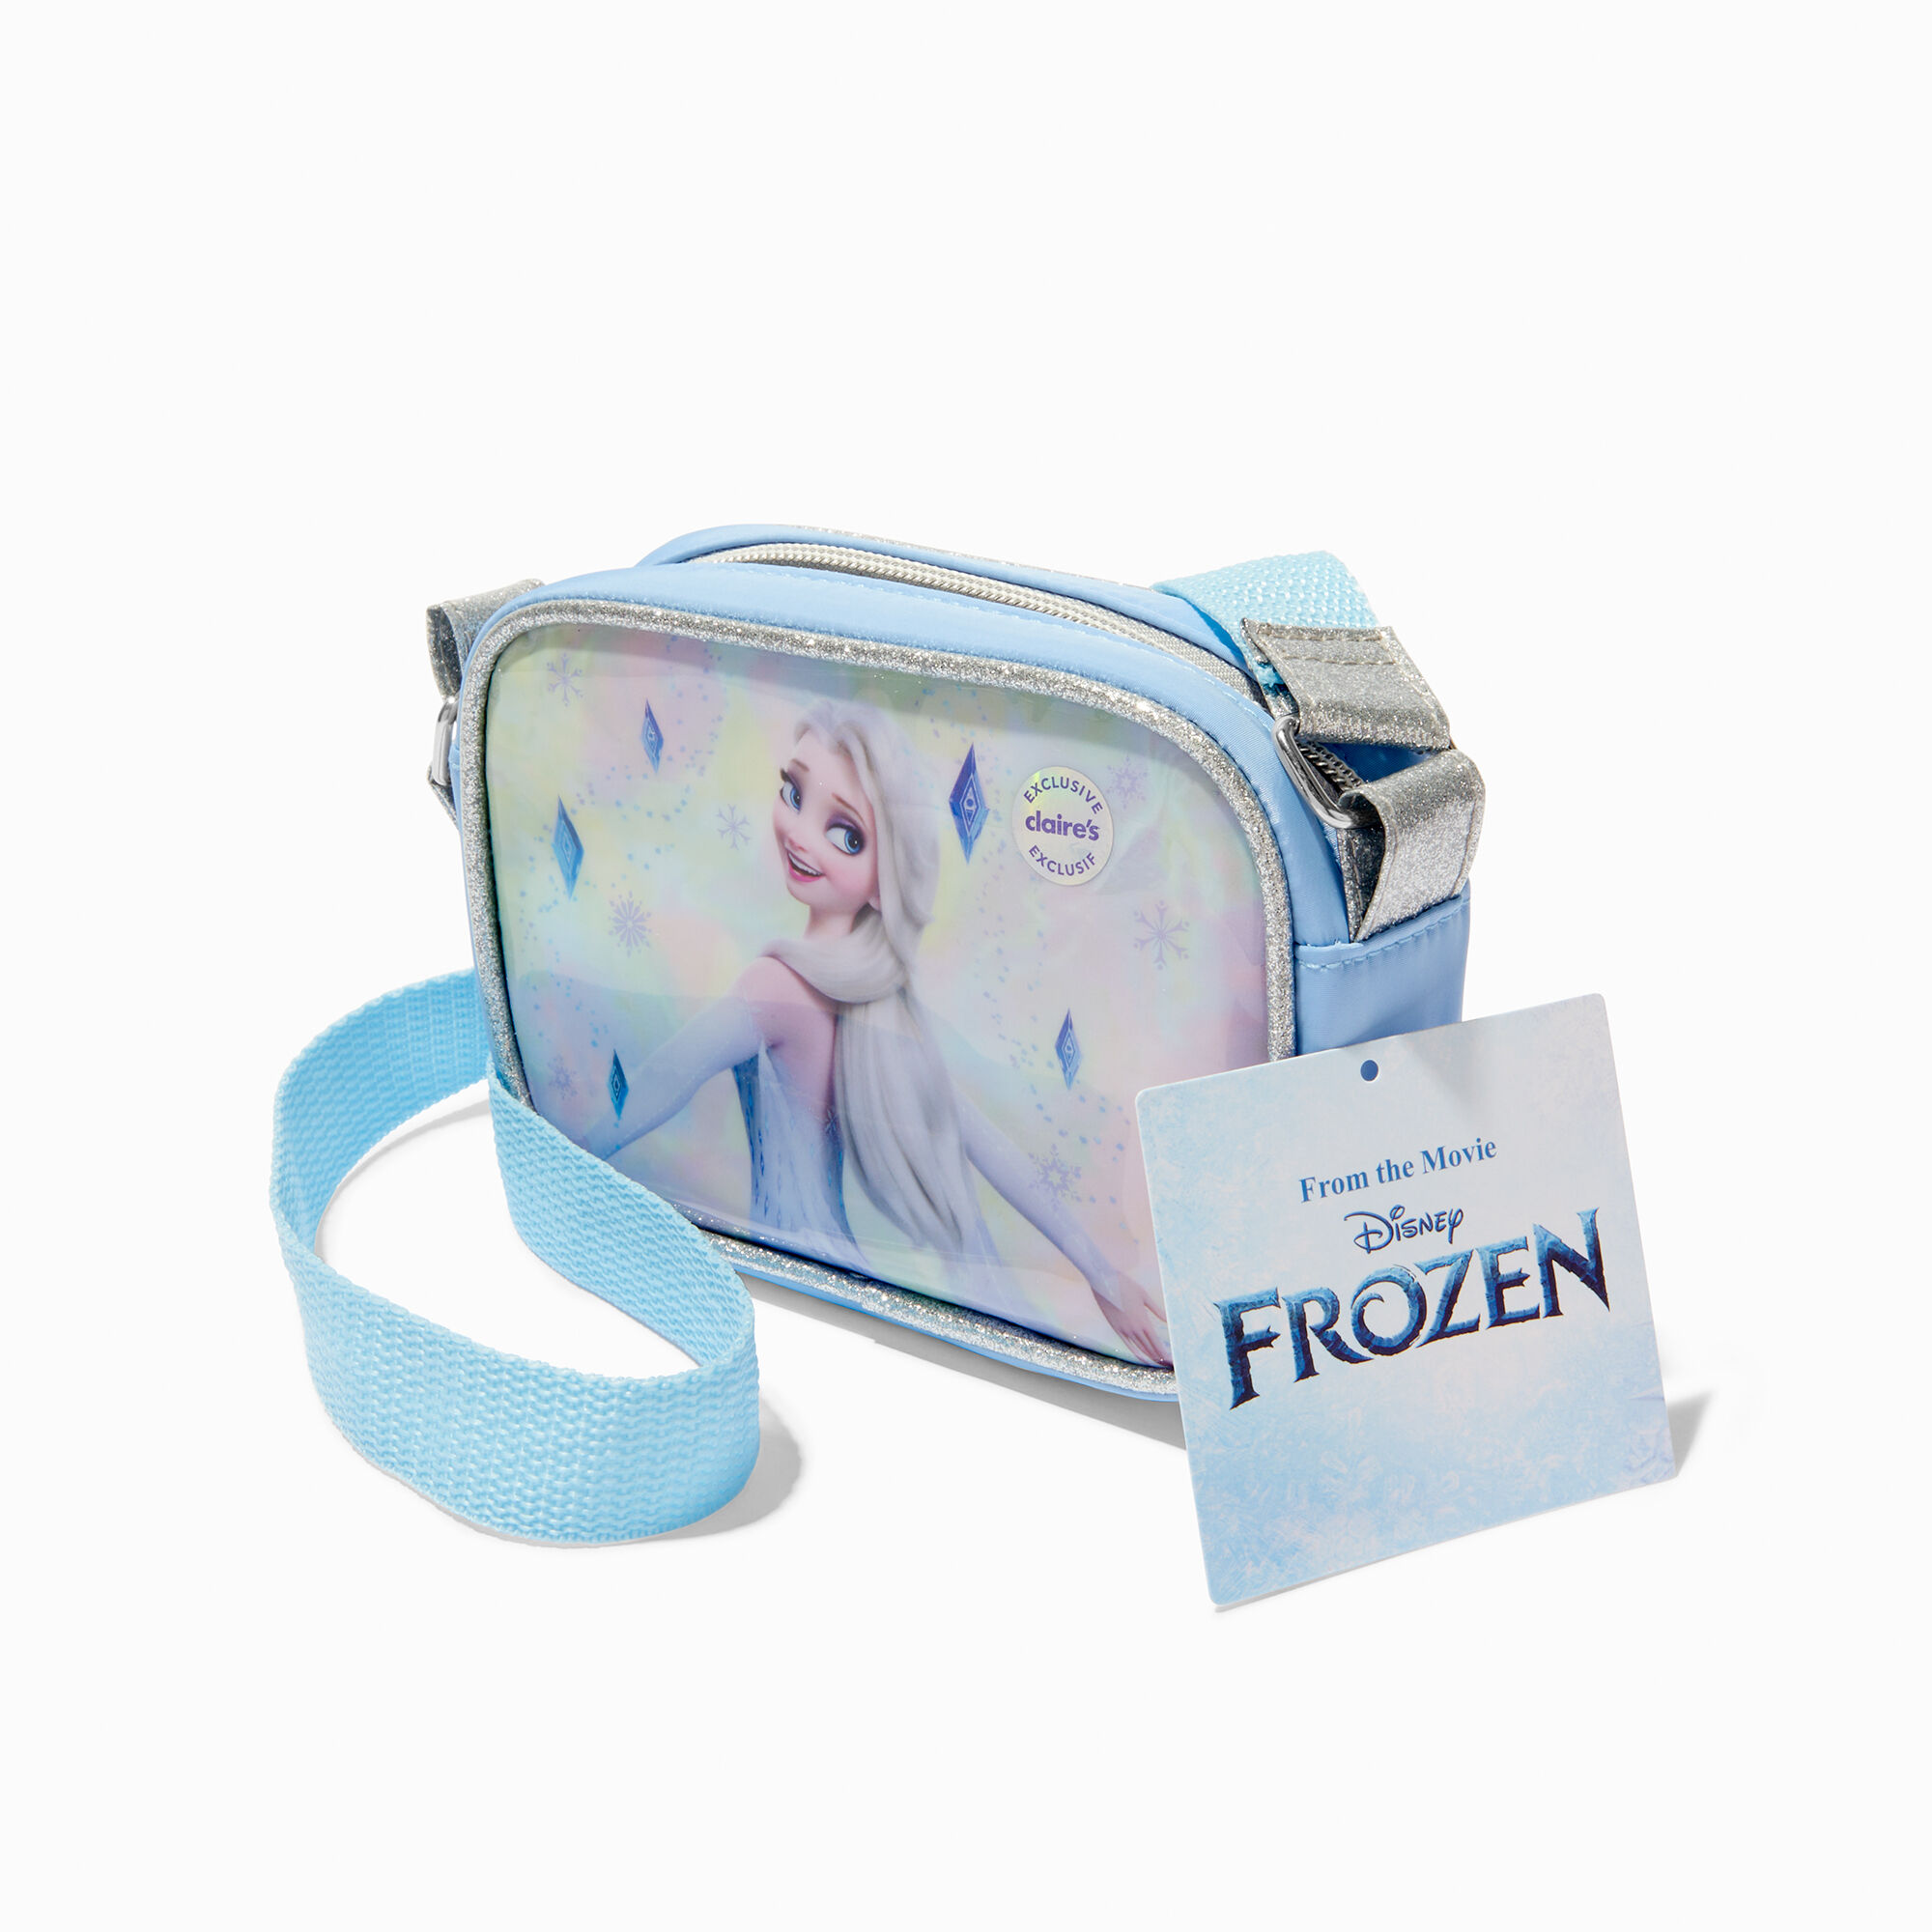 View Claires Exclusive Disney Frozen Elsa Crossbody Bag information